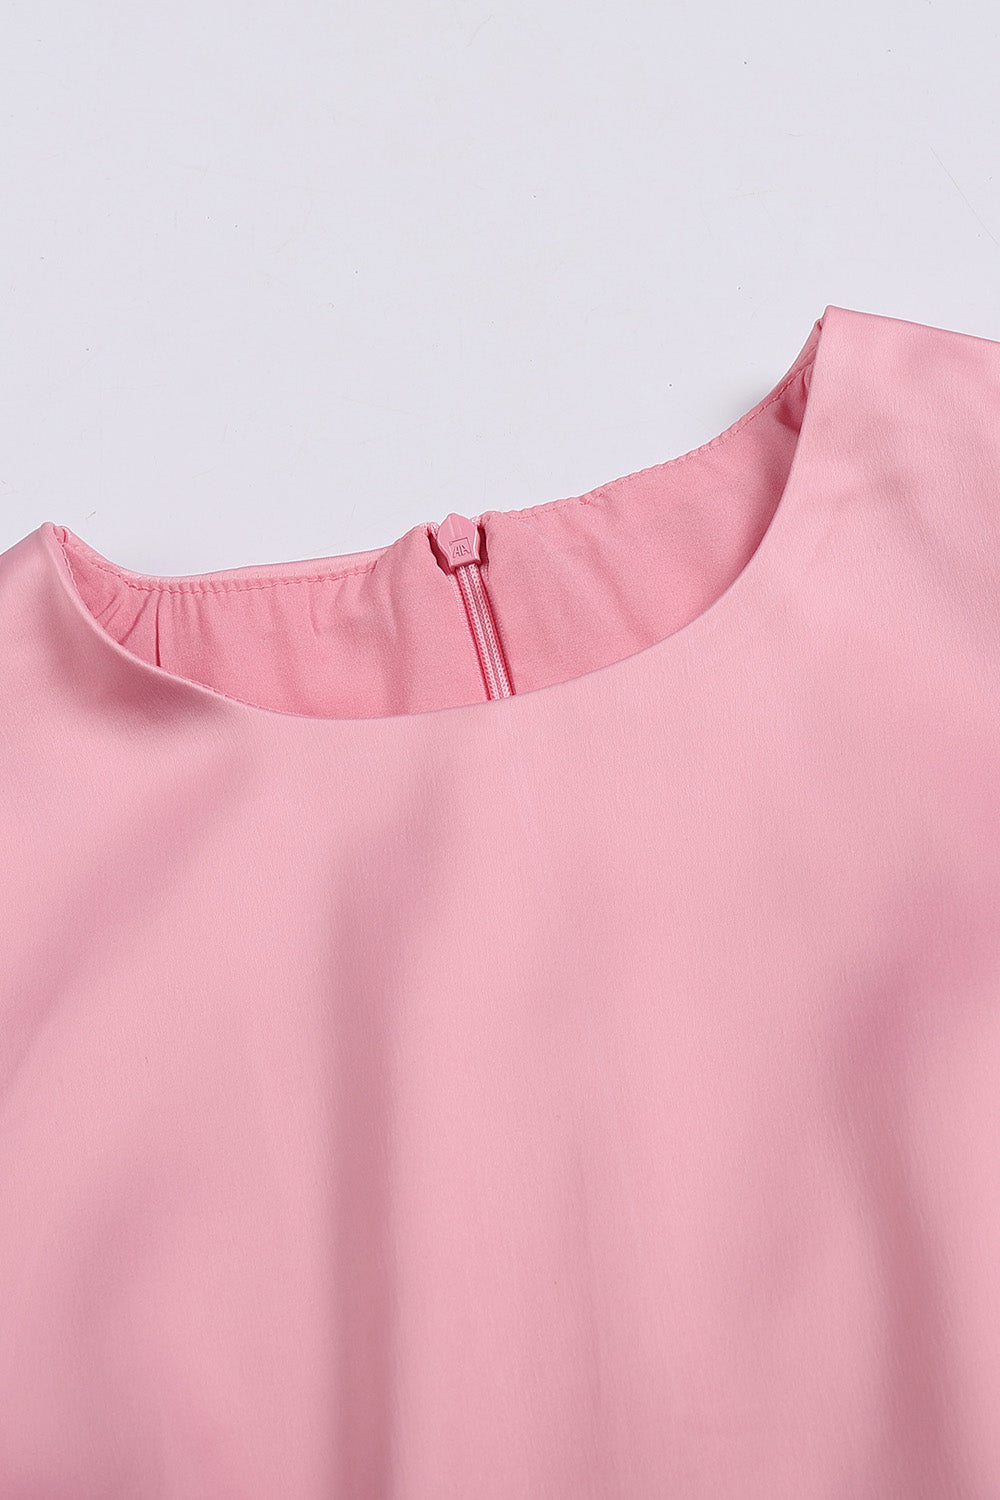 Mini vestido justo rosa com gola redonda e flor 3D sem mangas